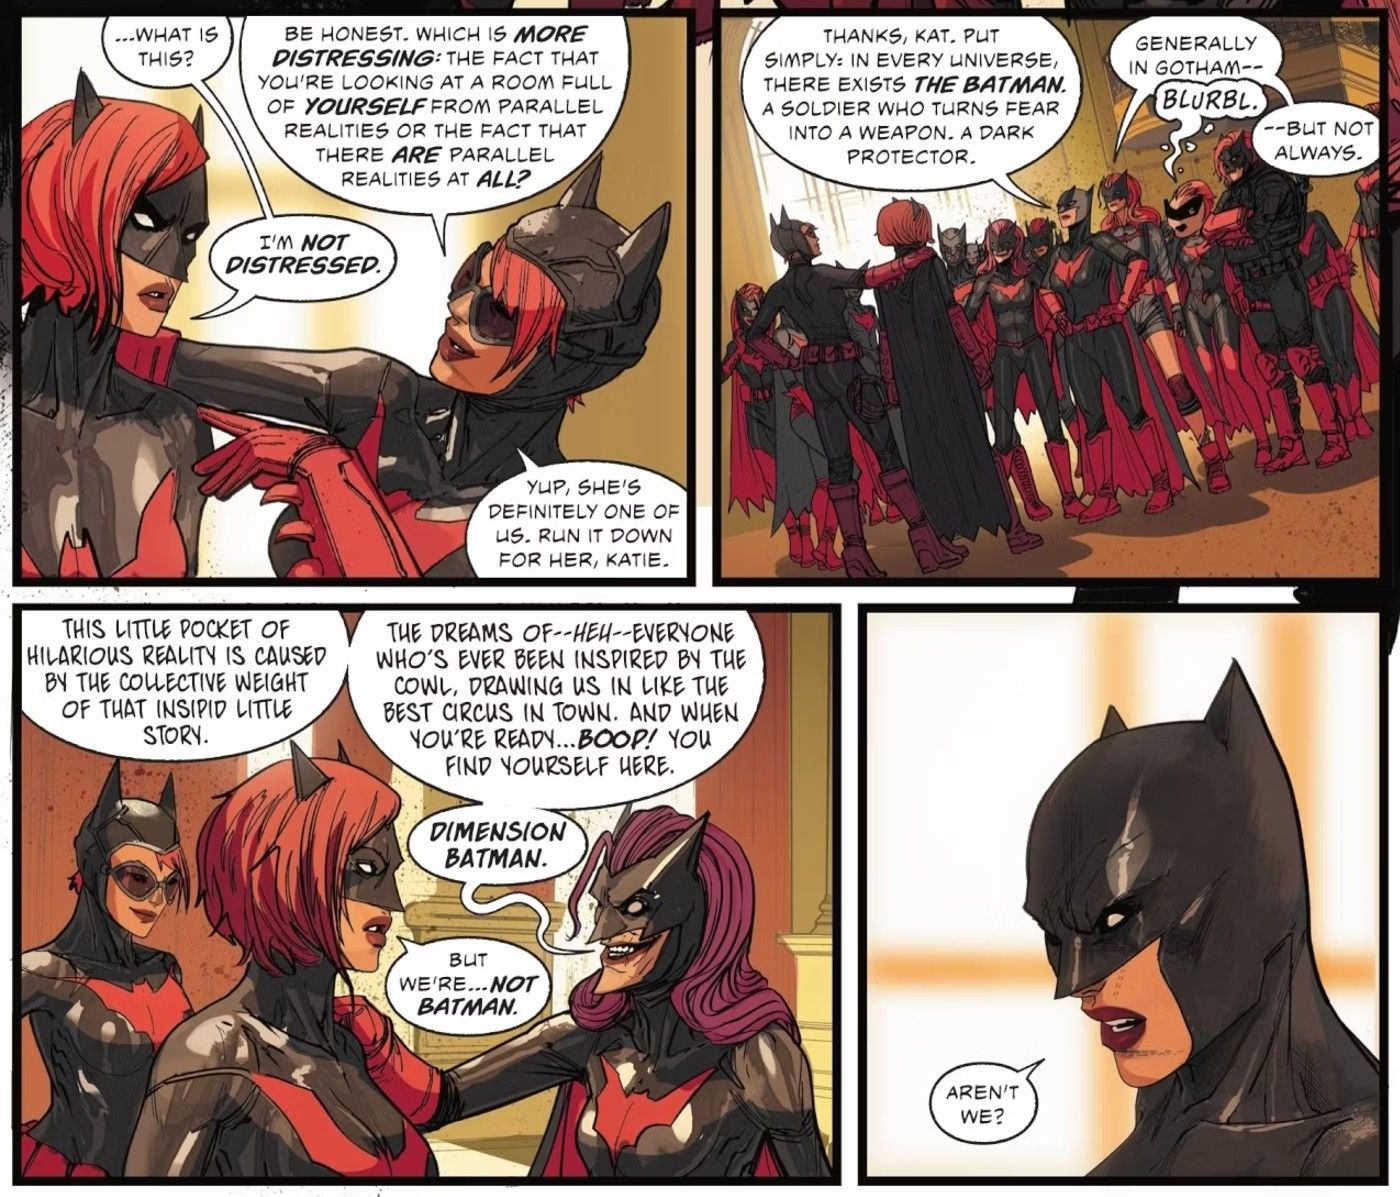 Comic book panels: many version of Batwoman discuss Dimension Batman.